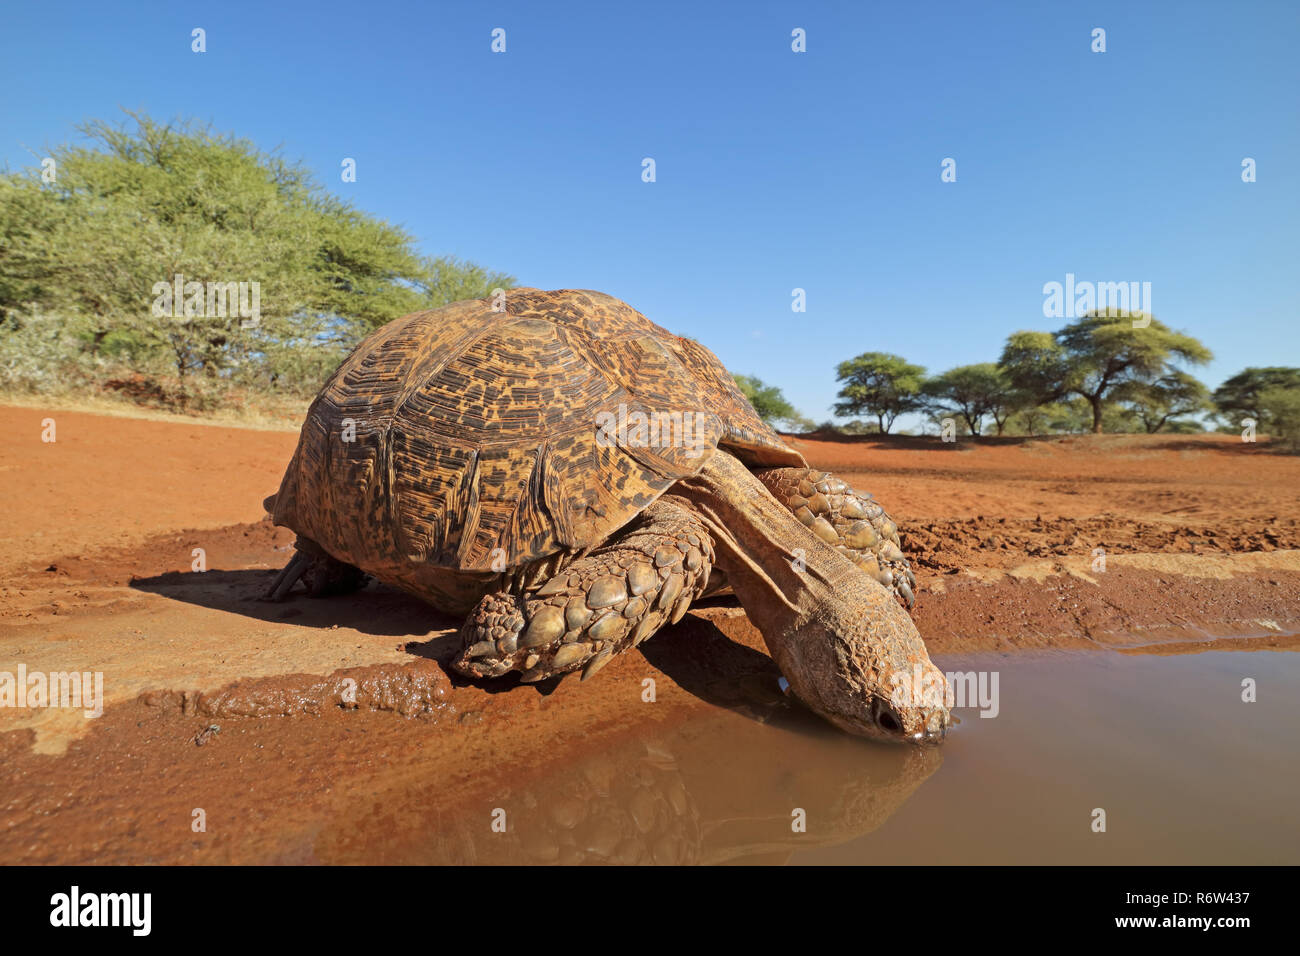 Leopard tortoise drinking water Stock Photo